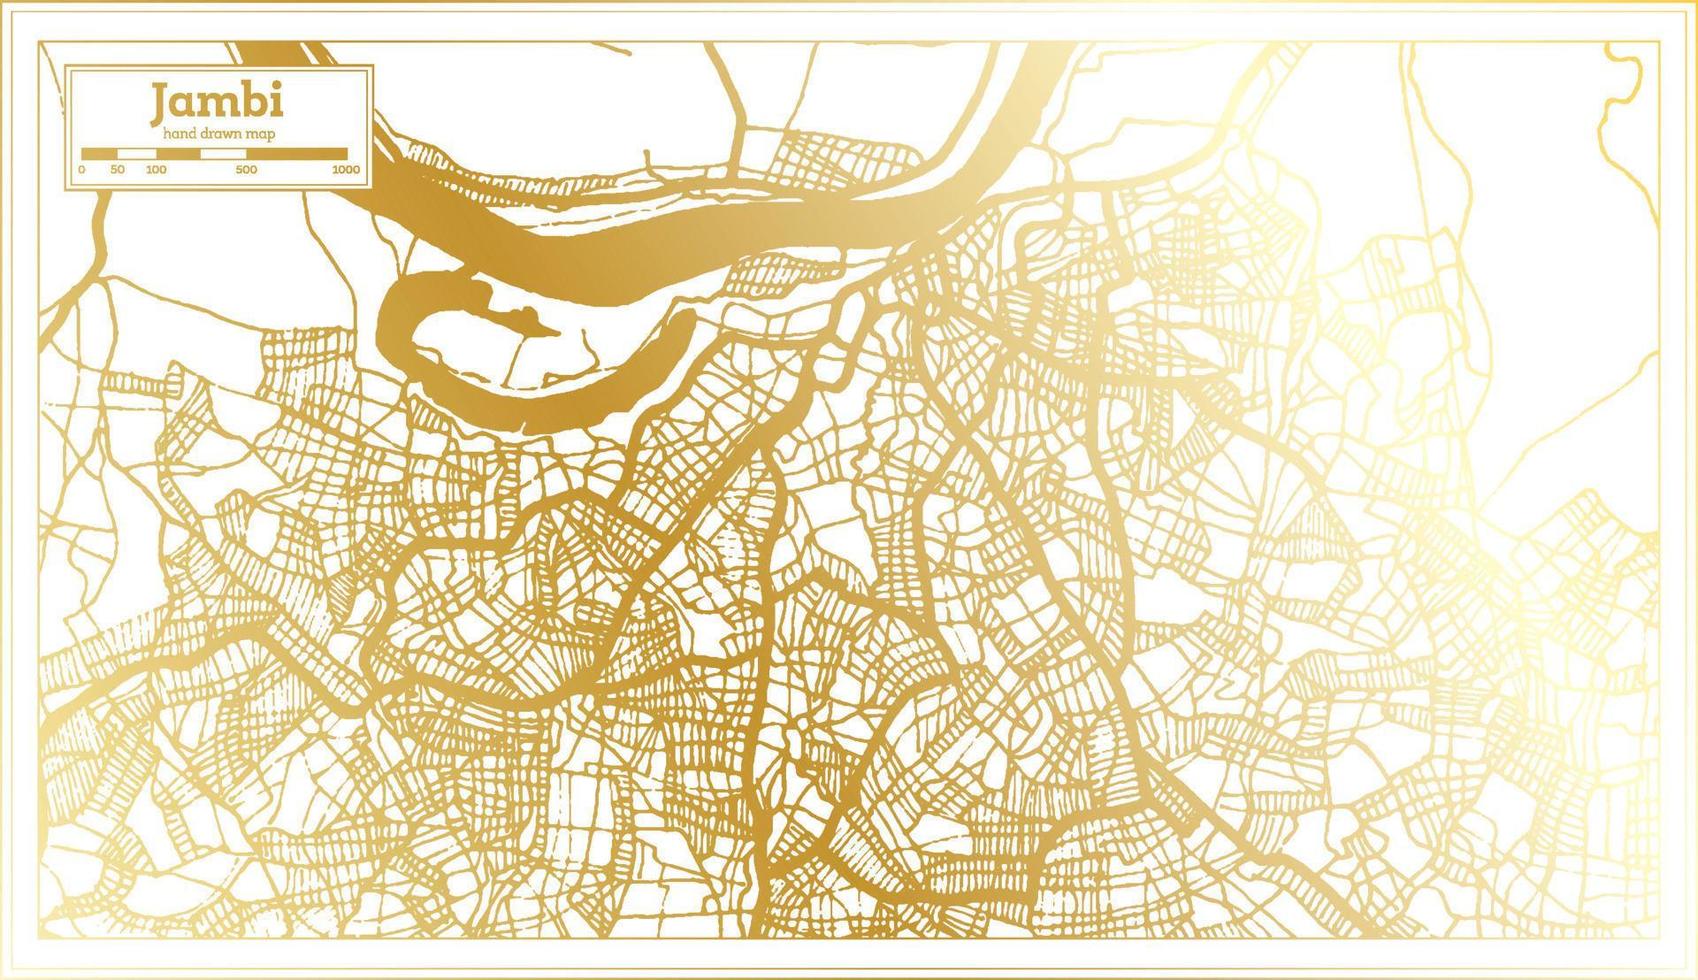 Jambi Indonesien Stadtplan im Retro-Stil in goldener Farbe. Übersichtskarte. vektor